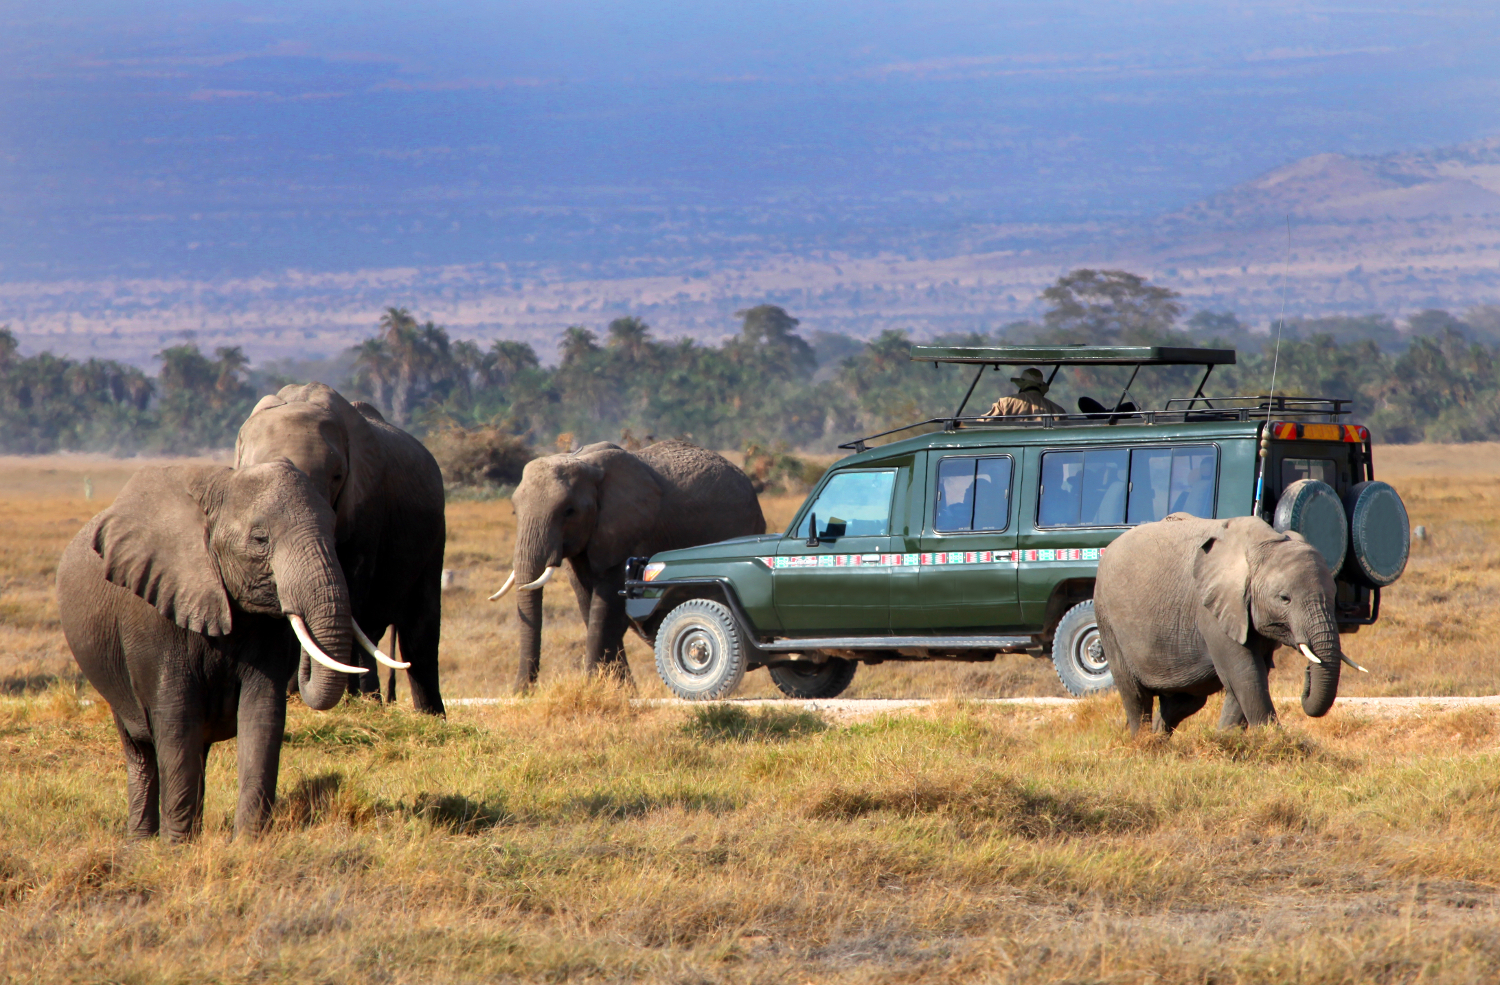 Kenya - Masai Mara Reserve - elephants